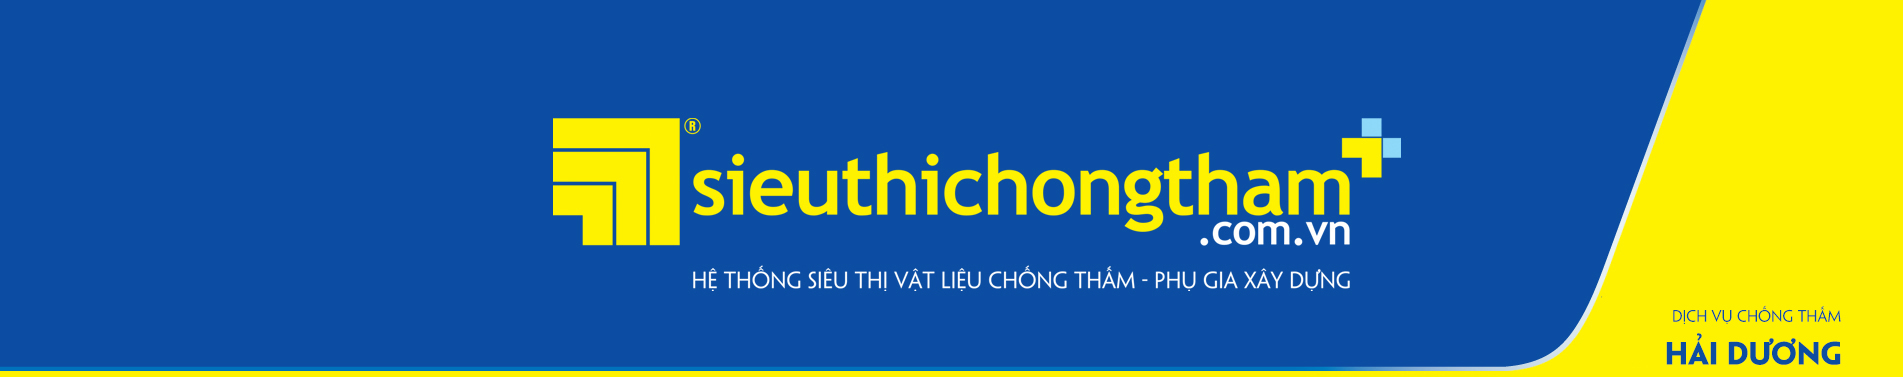 Dich Vu Chong Tham Hai Duong